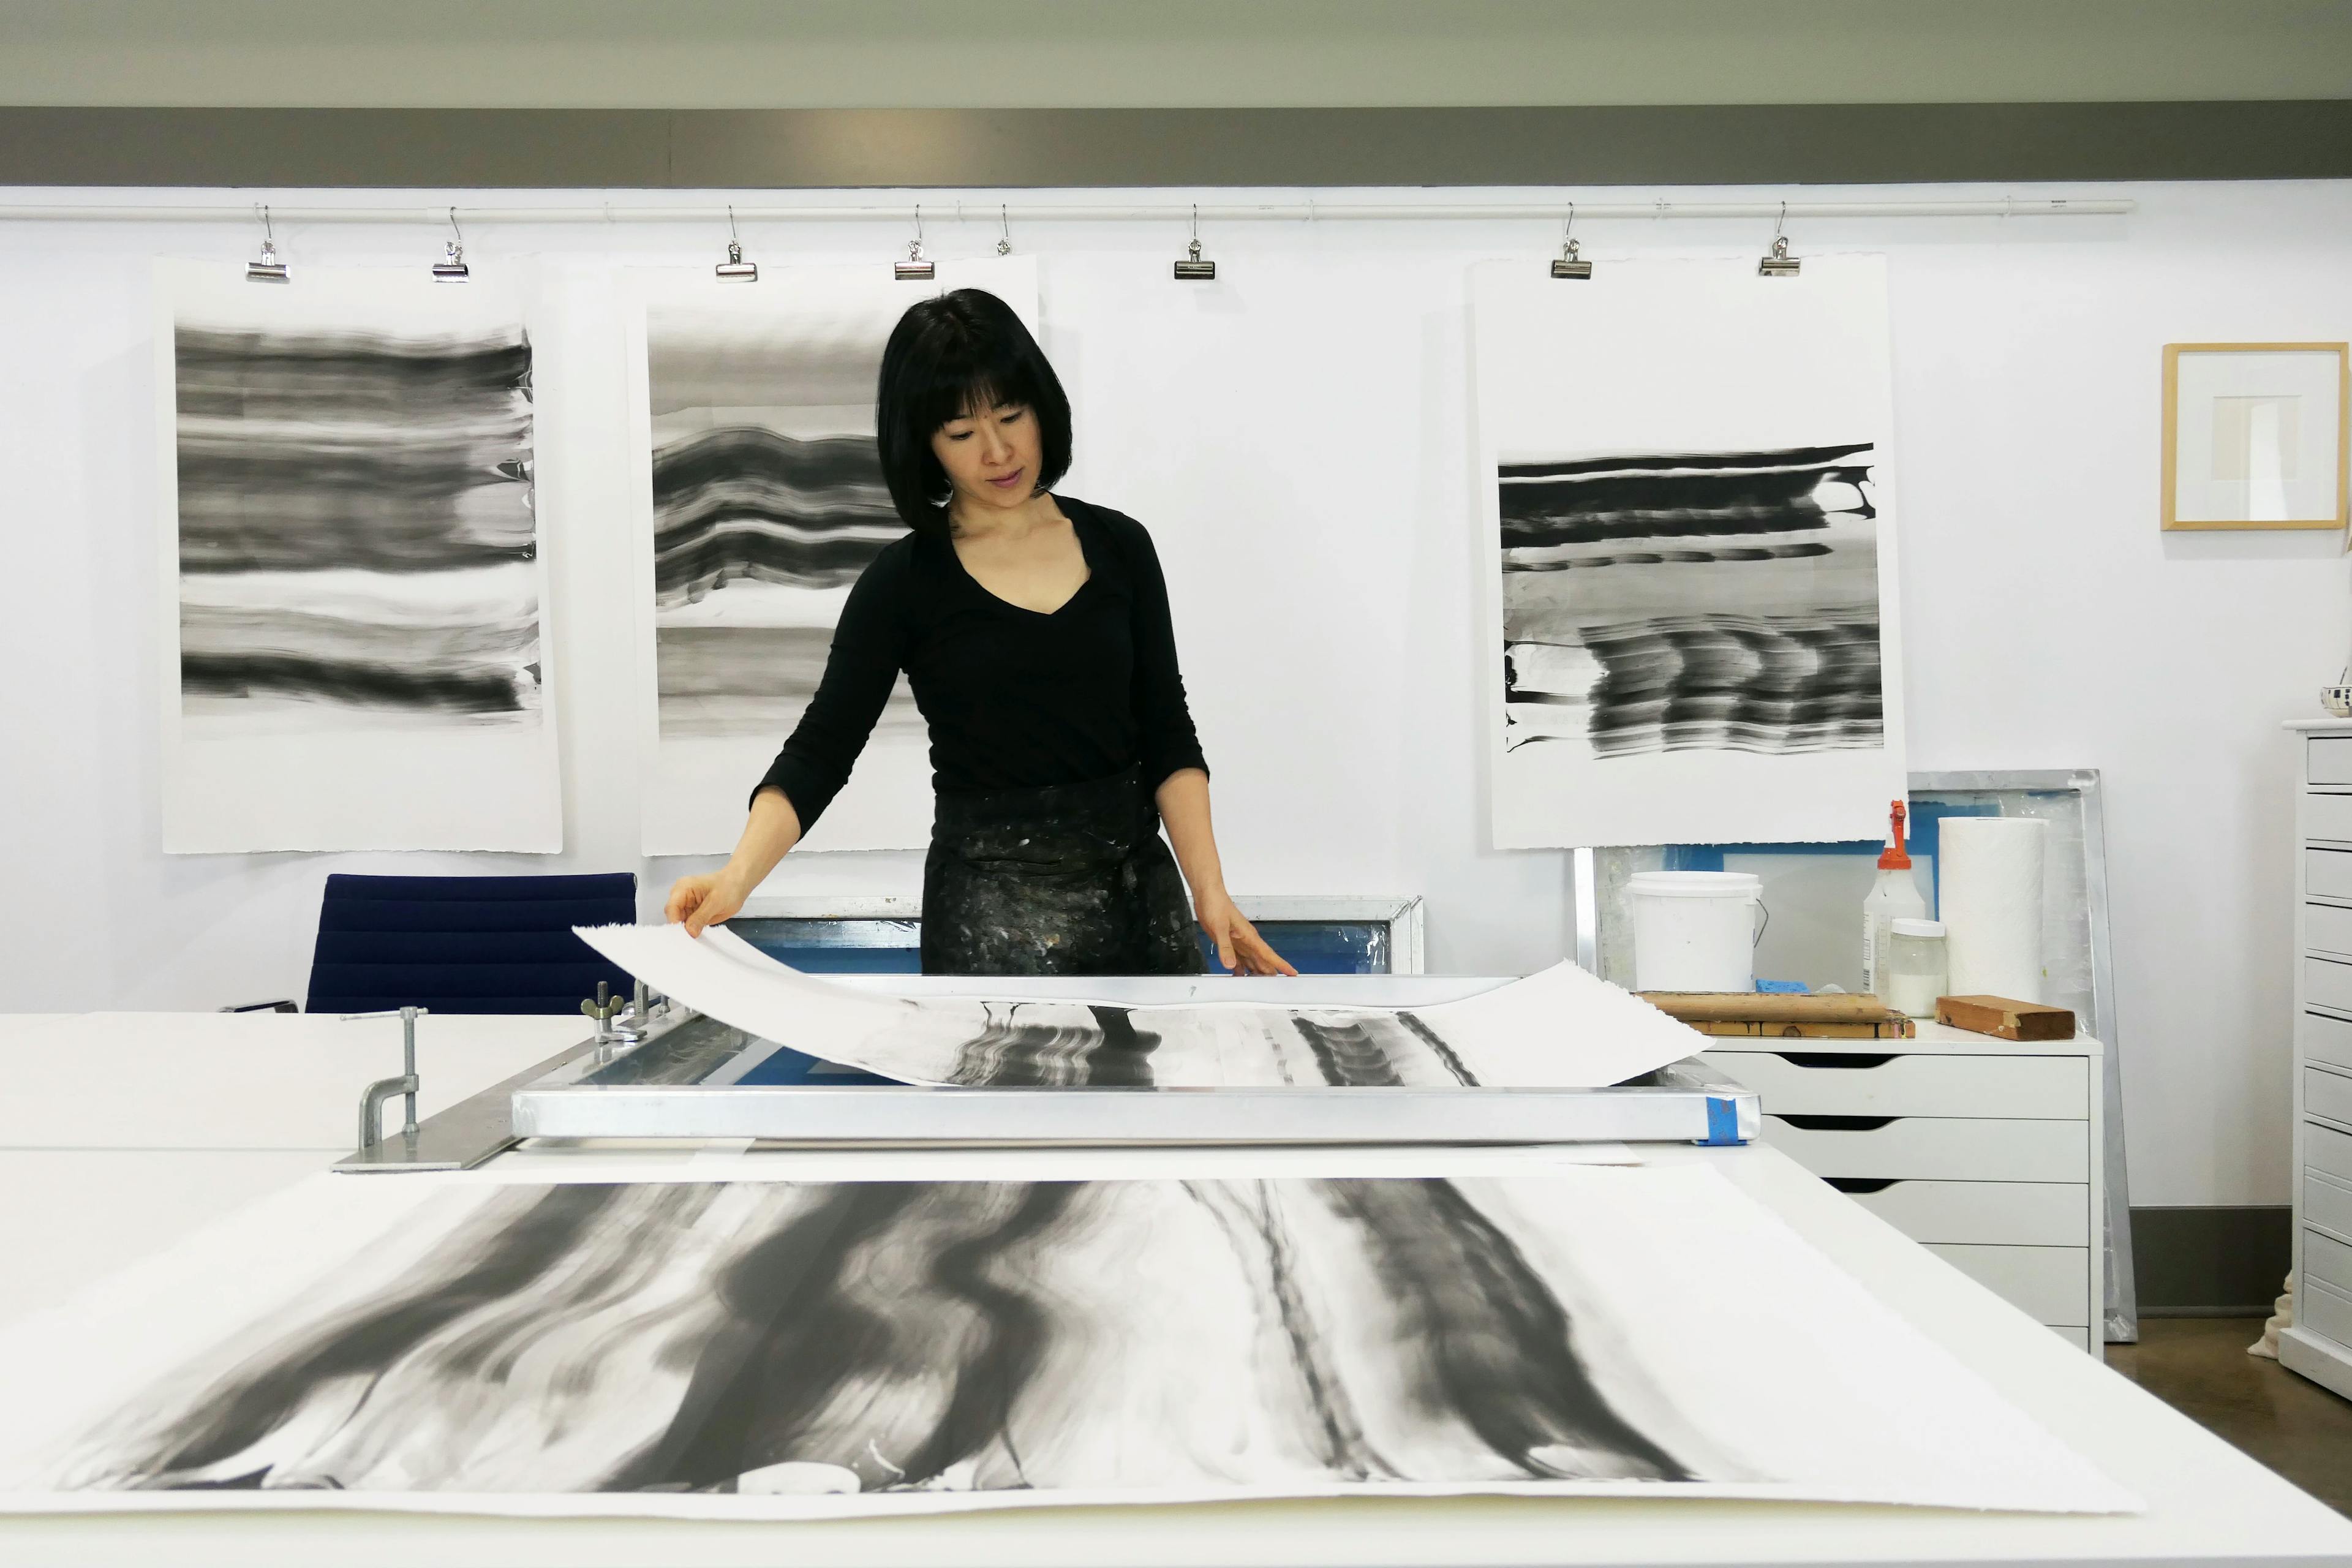 Journal: Visit with Keiko Kamata: Gallery